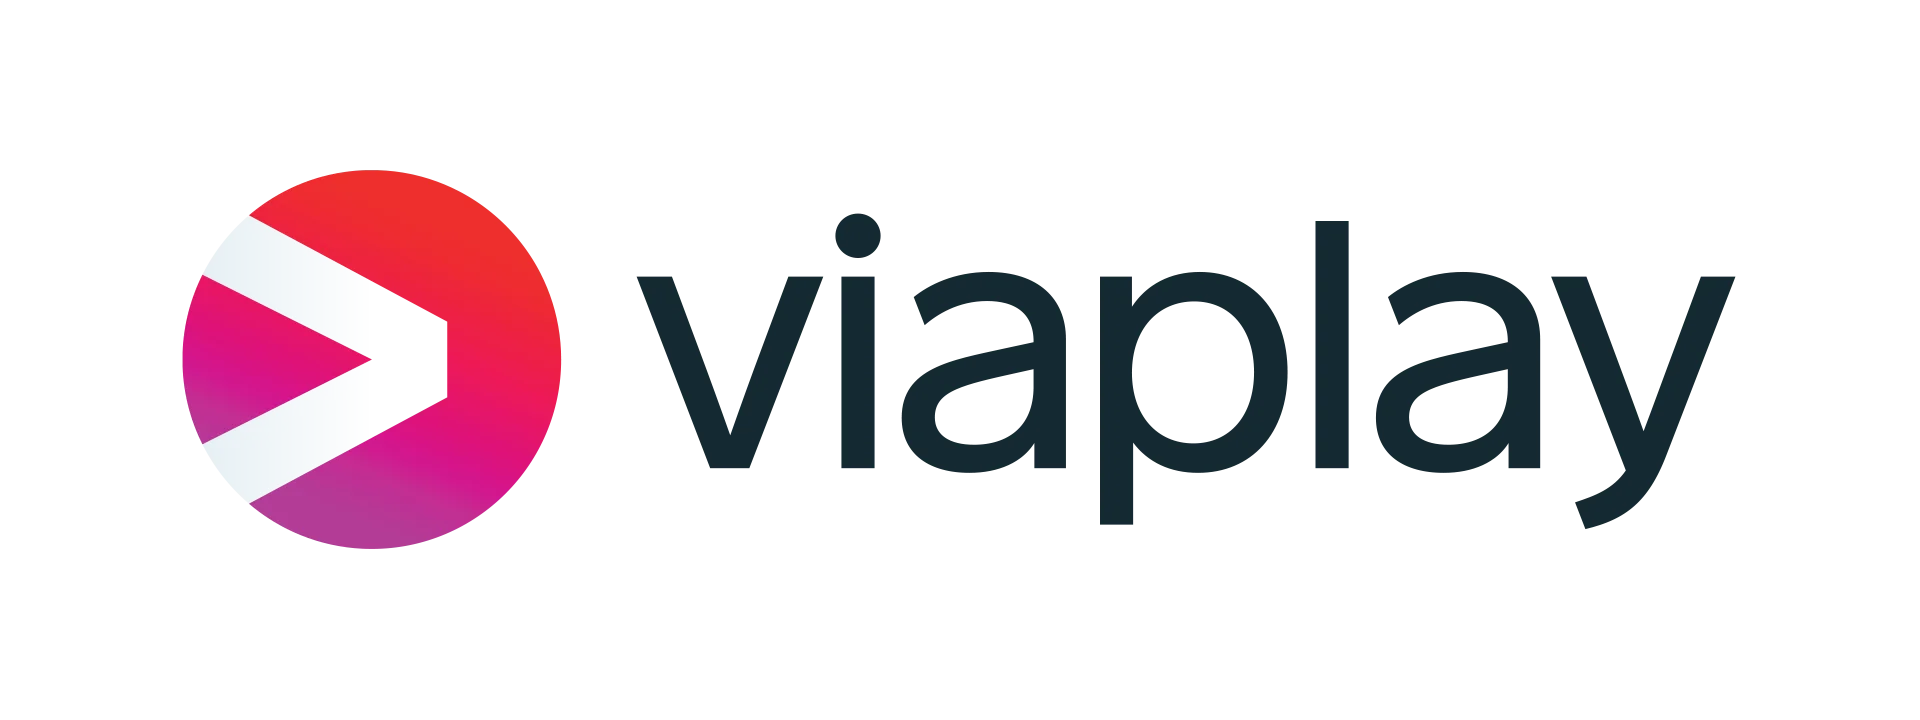 viaplay-logo.png